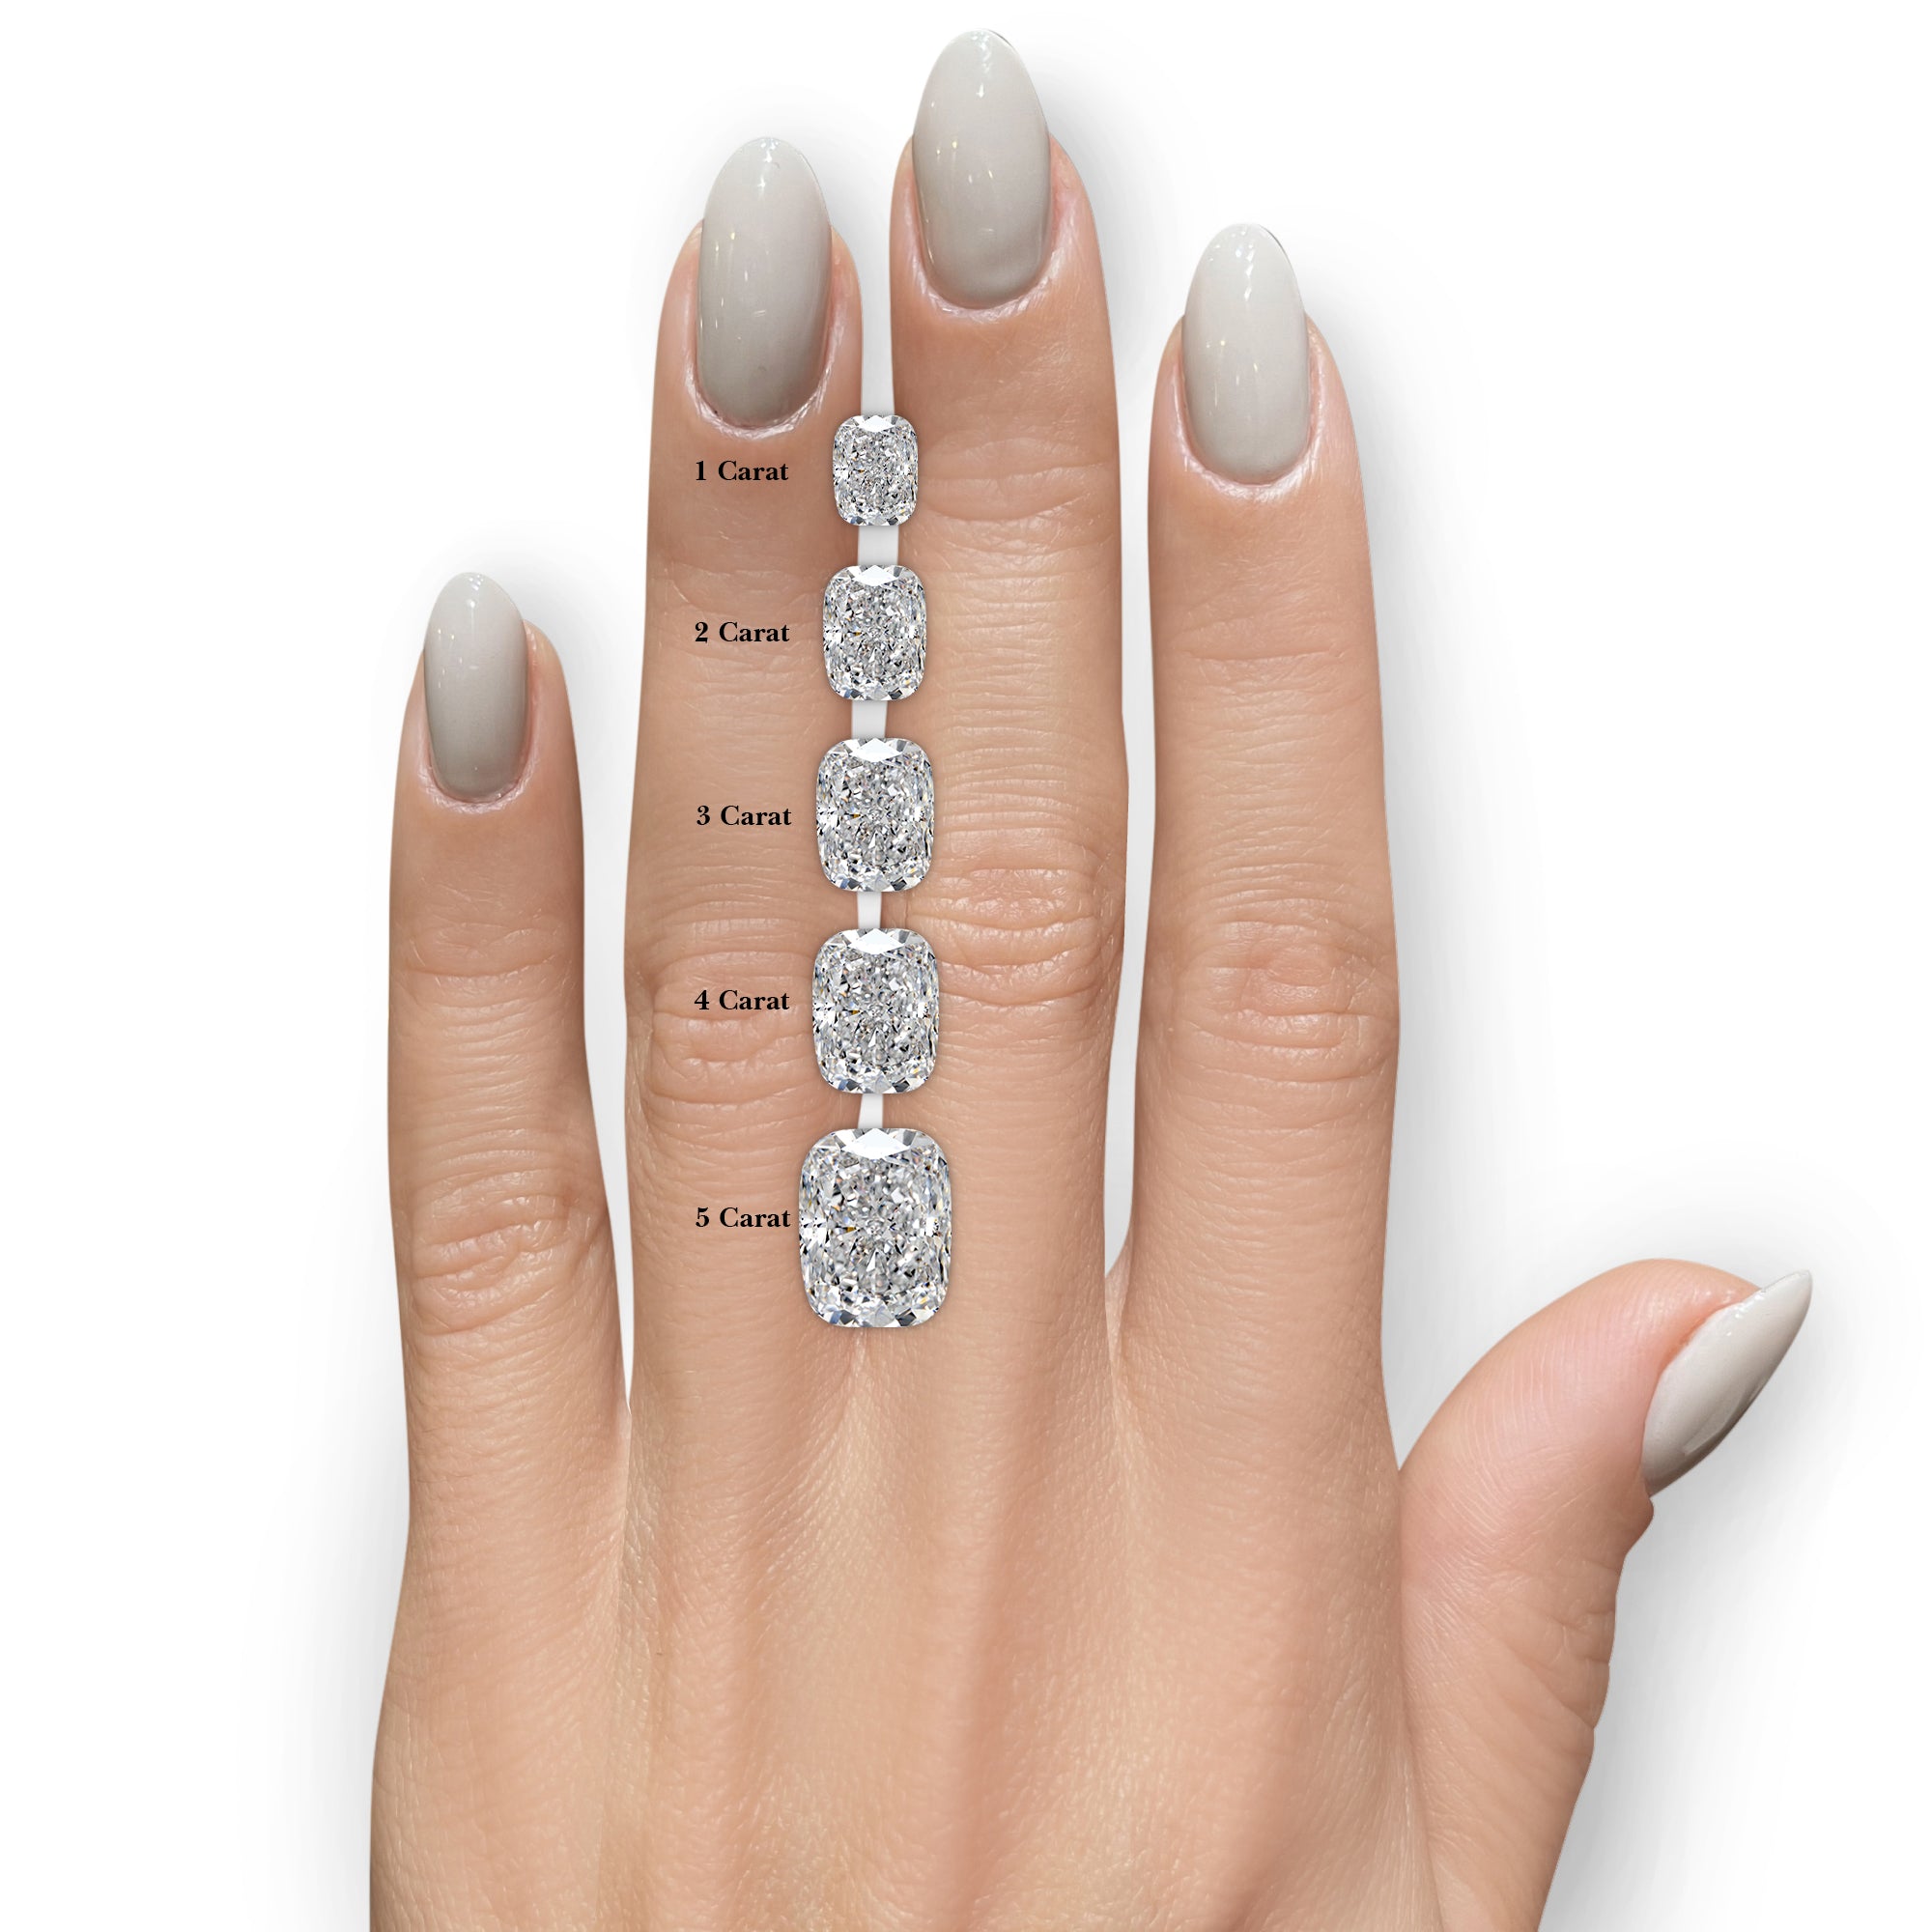 Priscilla Diamond Engagement Ring -14K White Gold